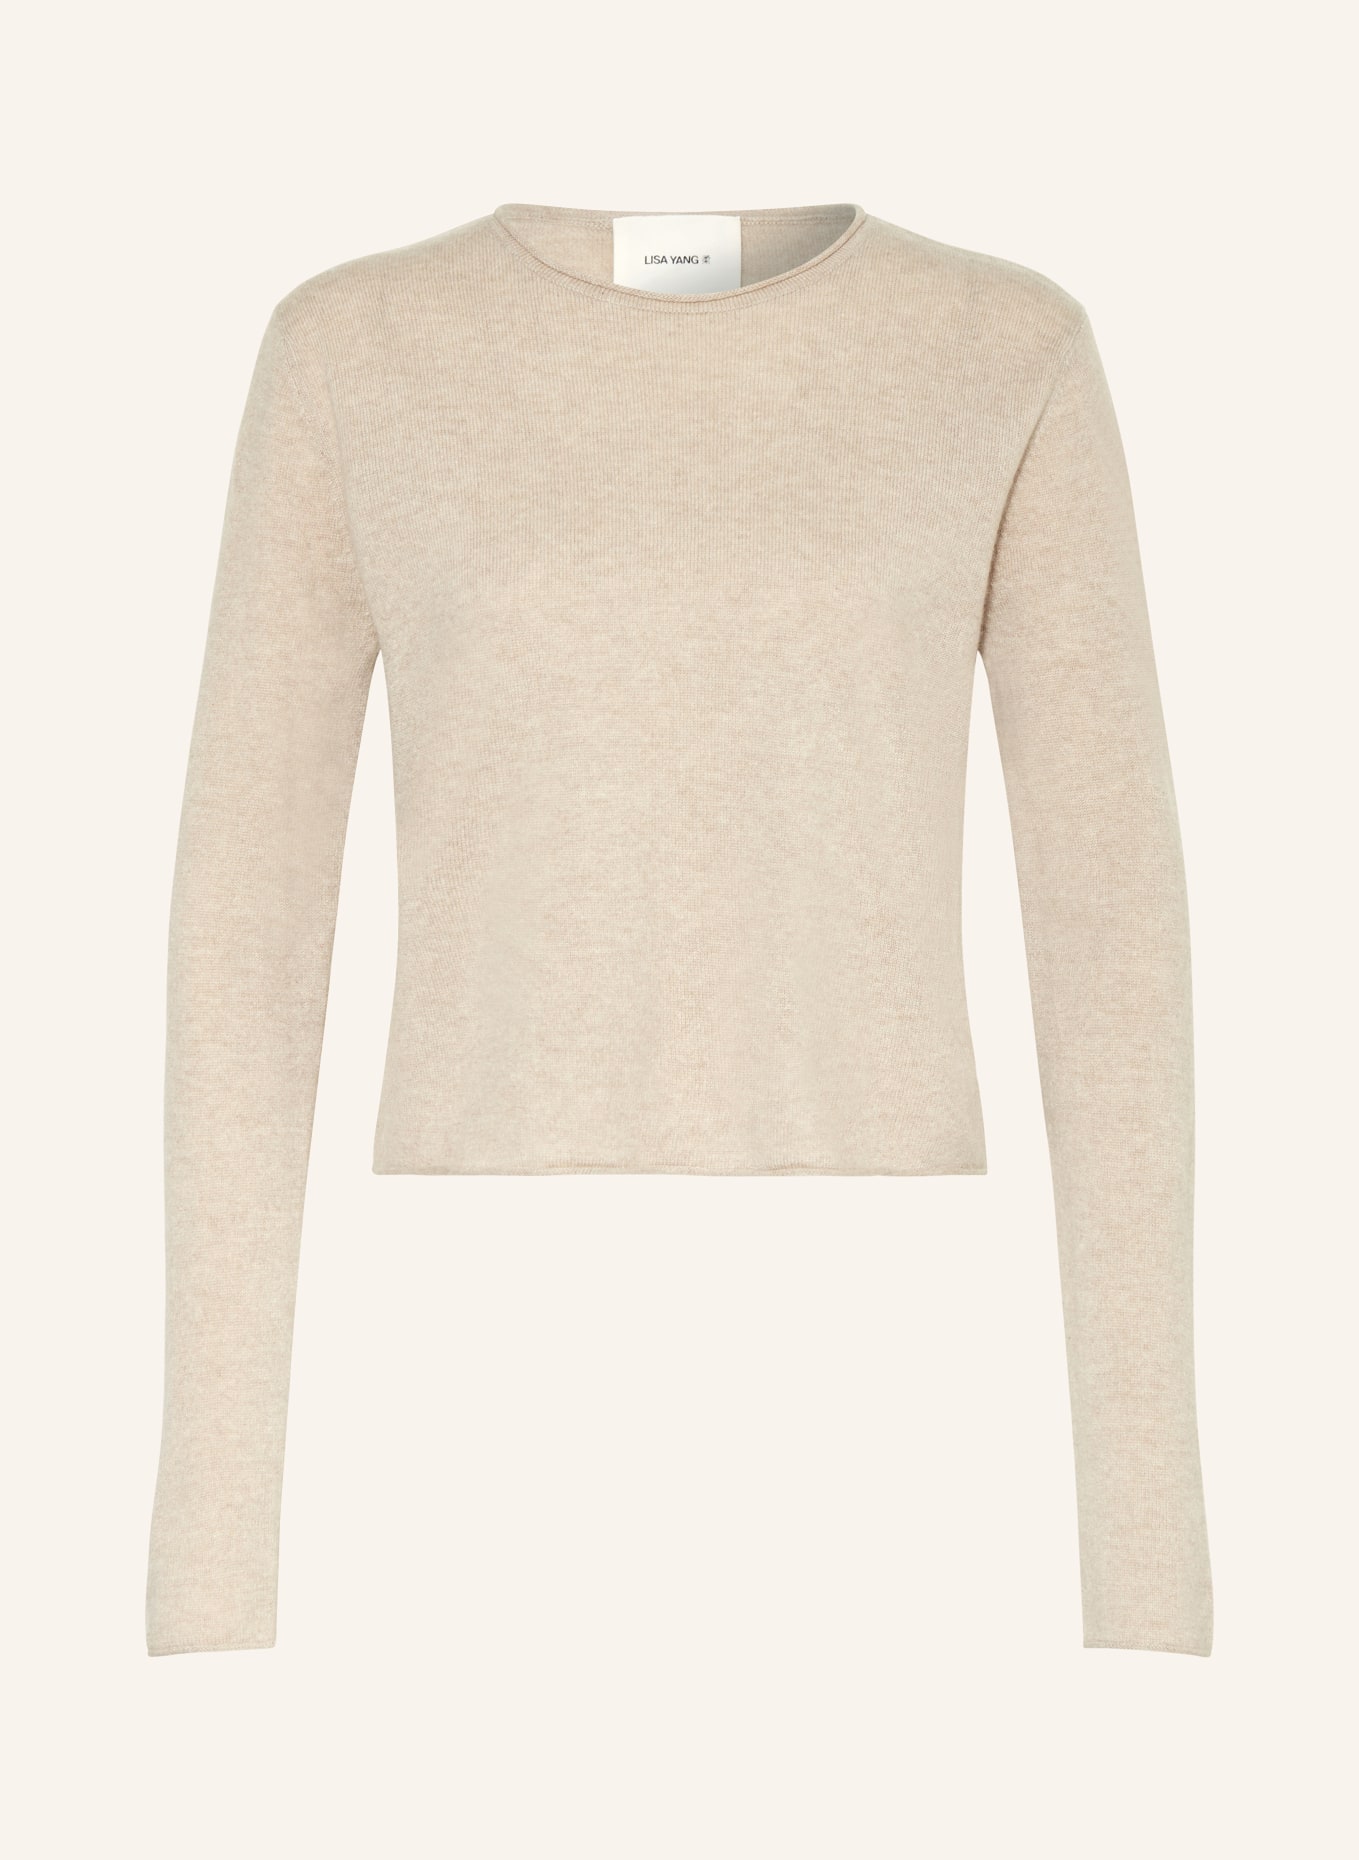 LISA YANG Cashmere-Pullover, Farbe: HELLBRAUN (Bild 1)